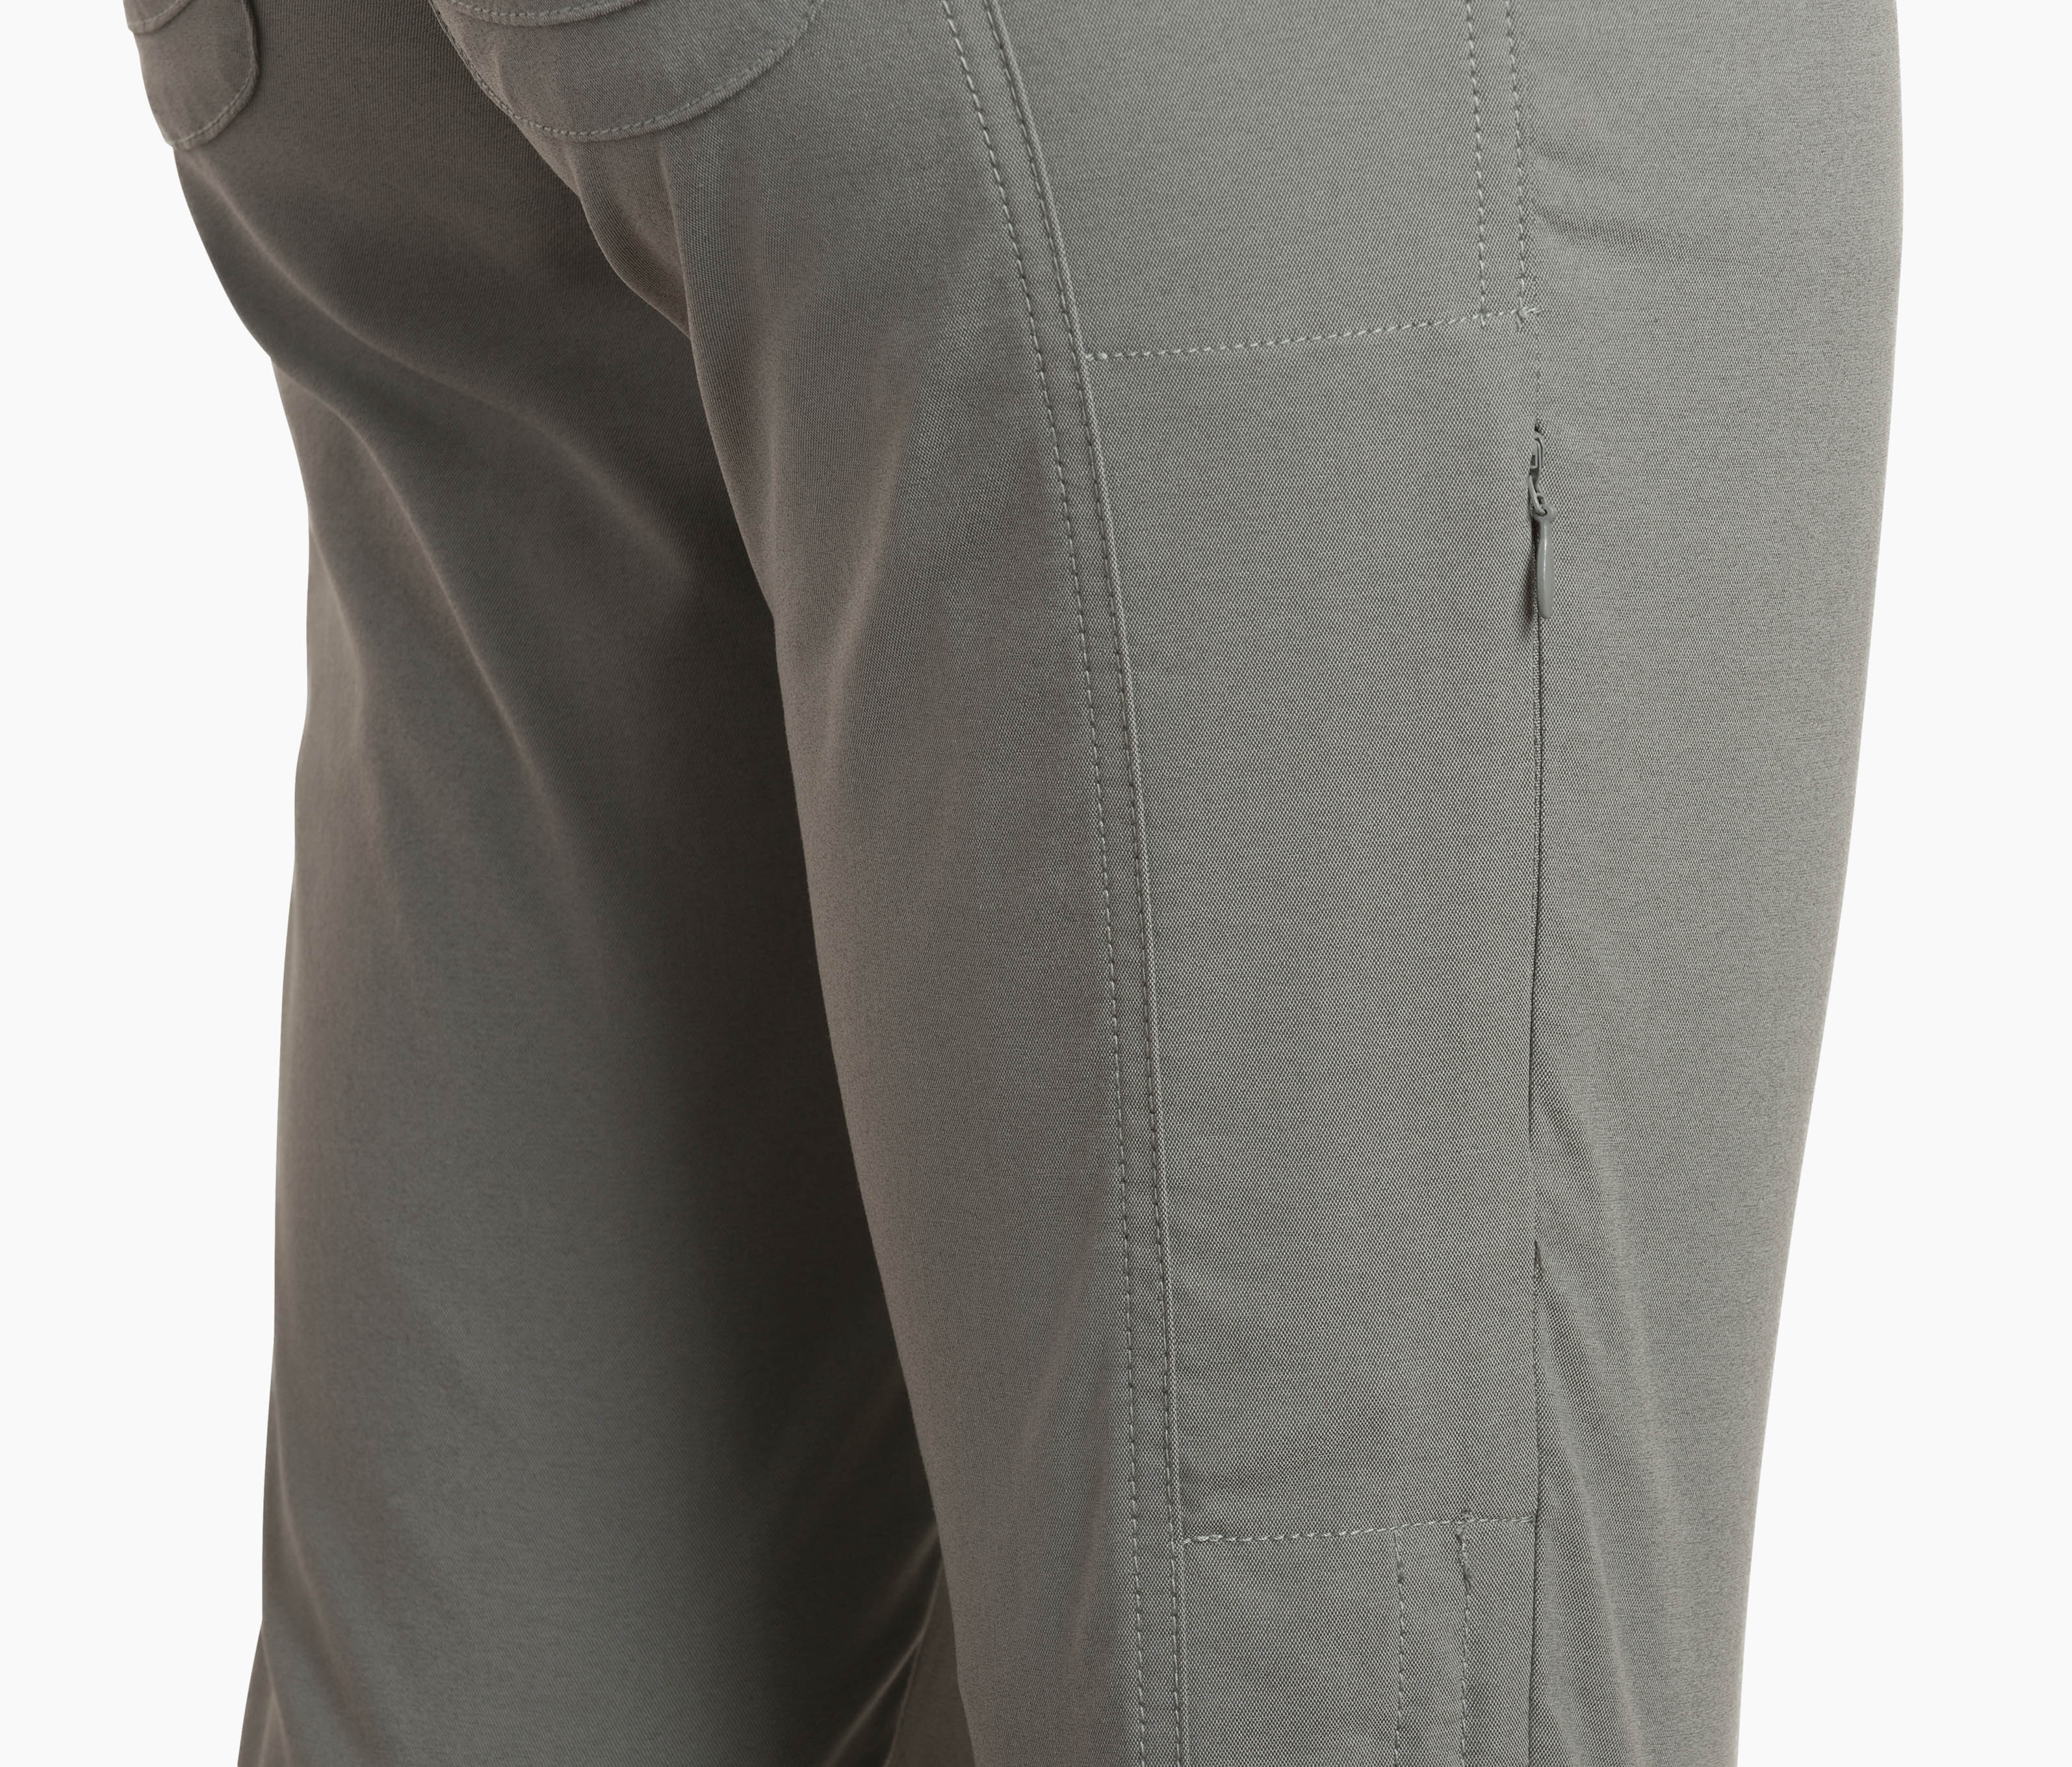 Kuhl Free Range Capri Crop Pants Style #6288 Hiking Woman's Size 8 Navy  Outdoor